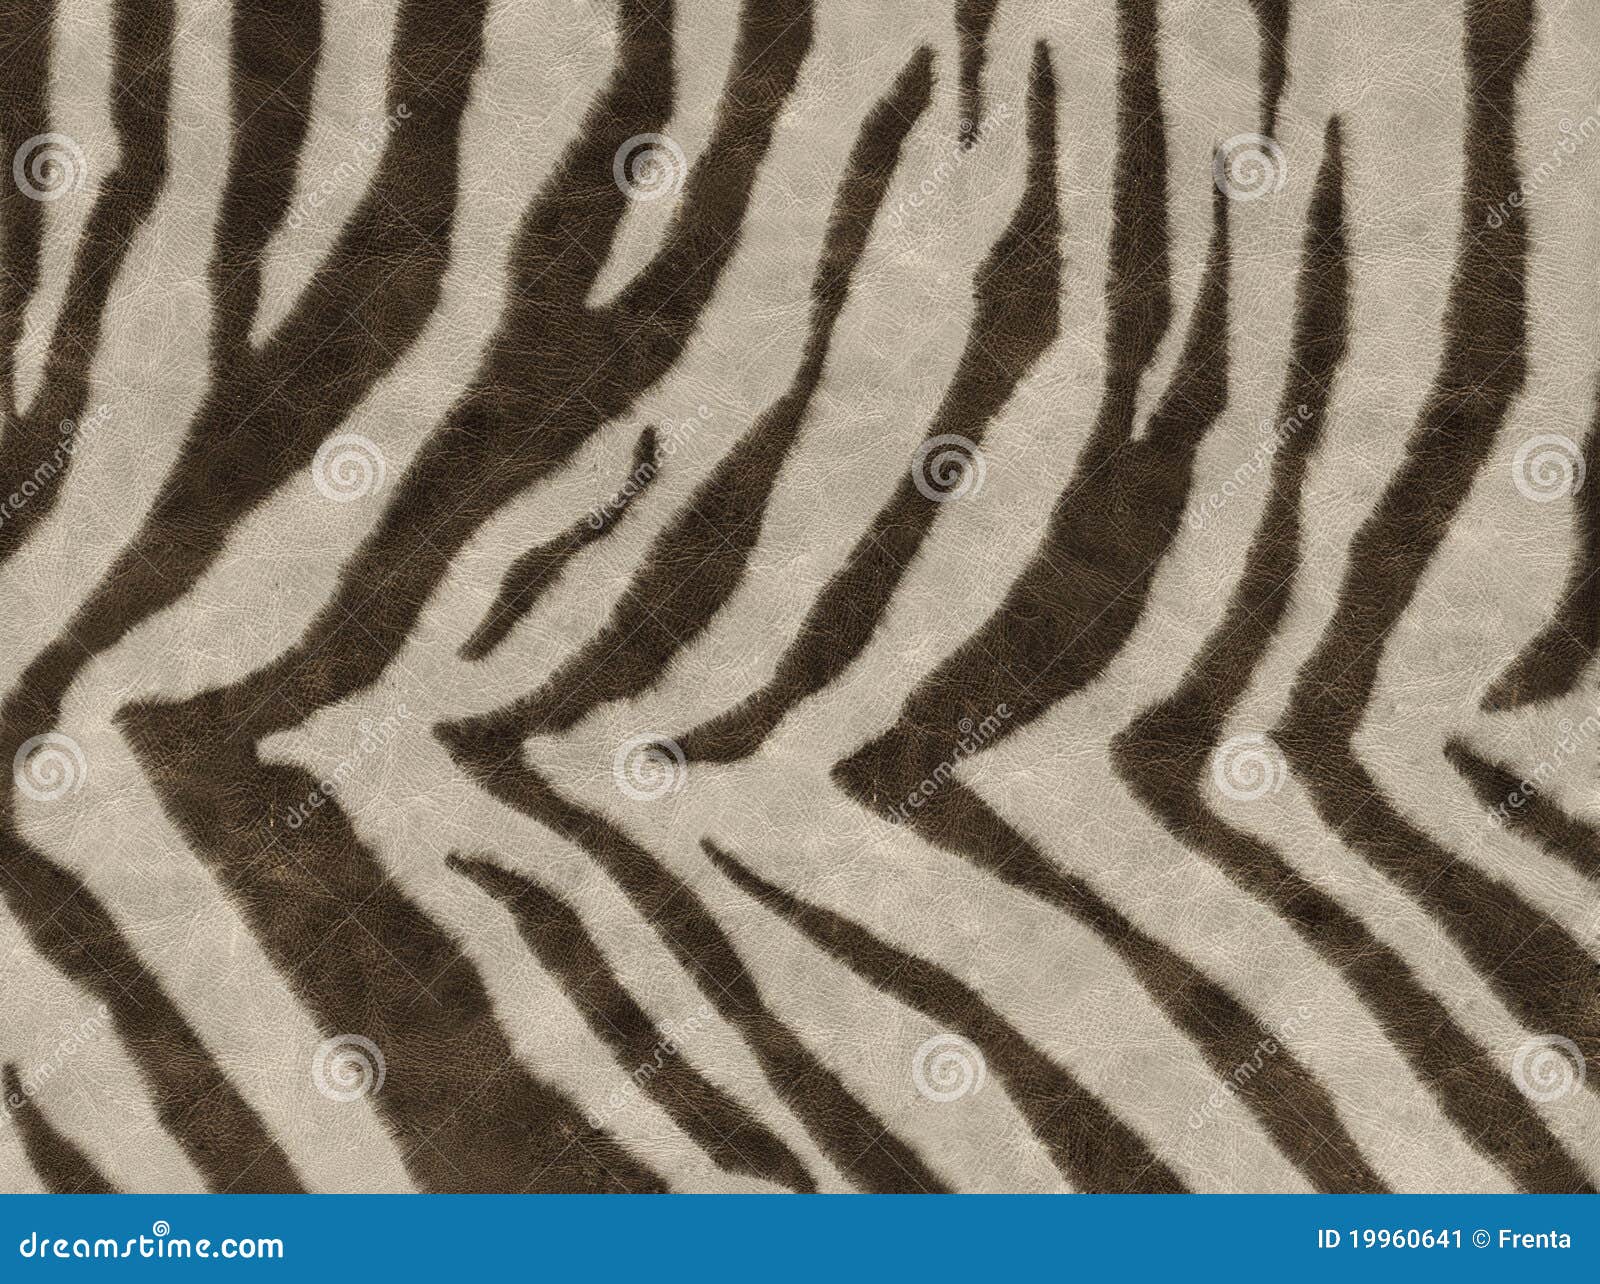 Animals skins textures. African animal zebra skin texture